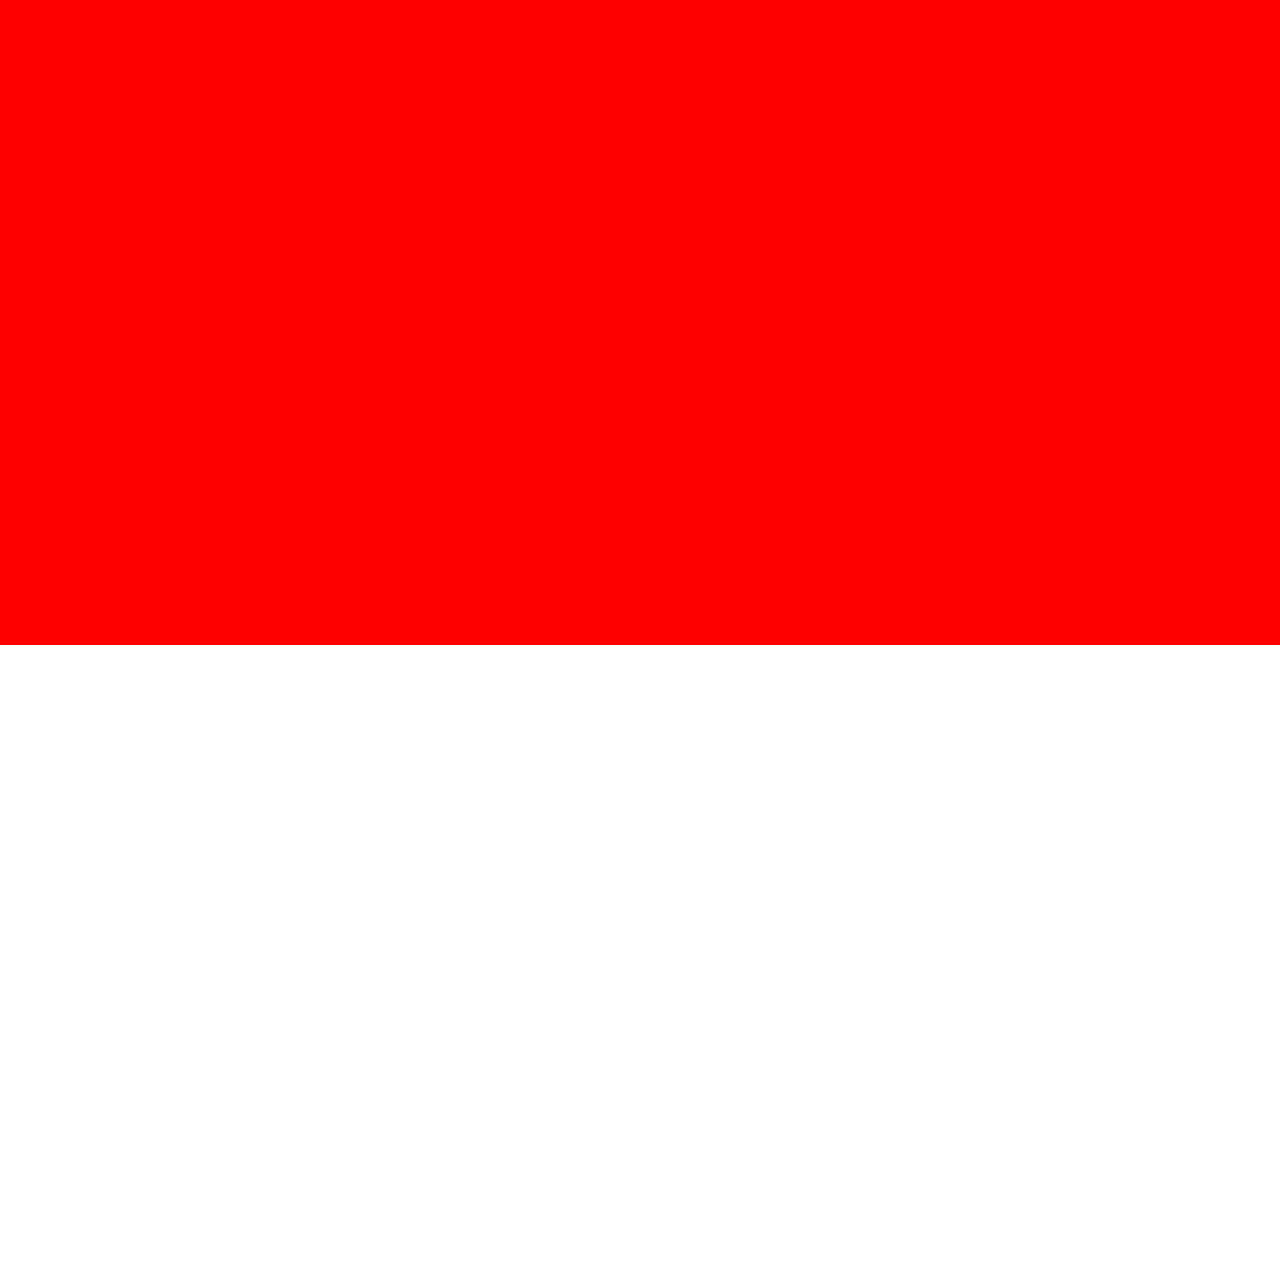 https://neelikon.co.uk/wp-content/uploads/2022/07/Indonesia.jpg